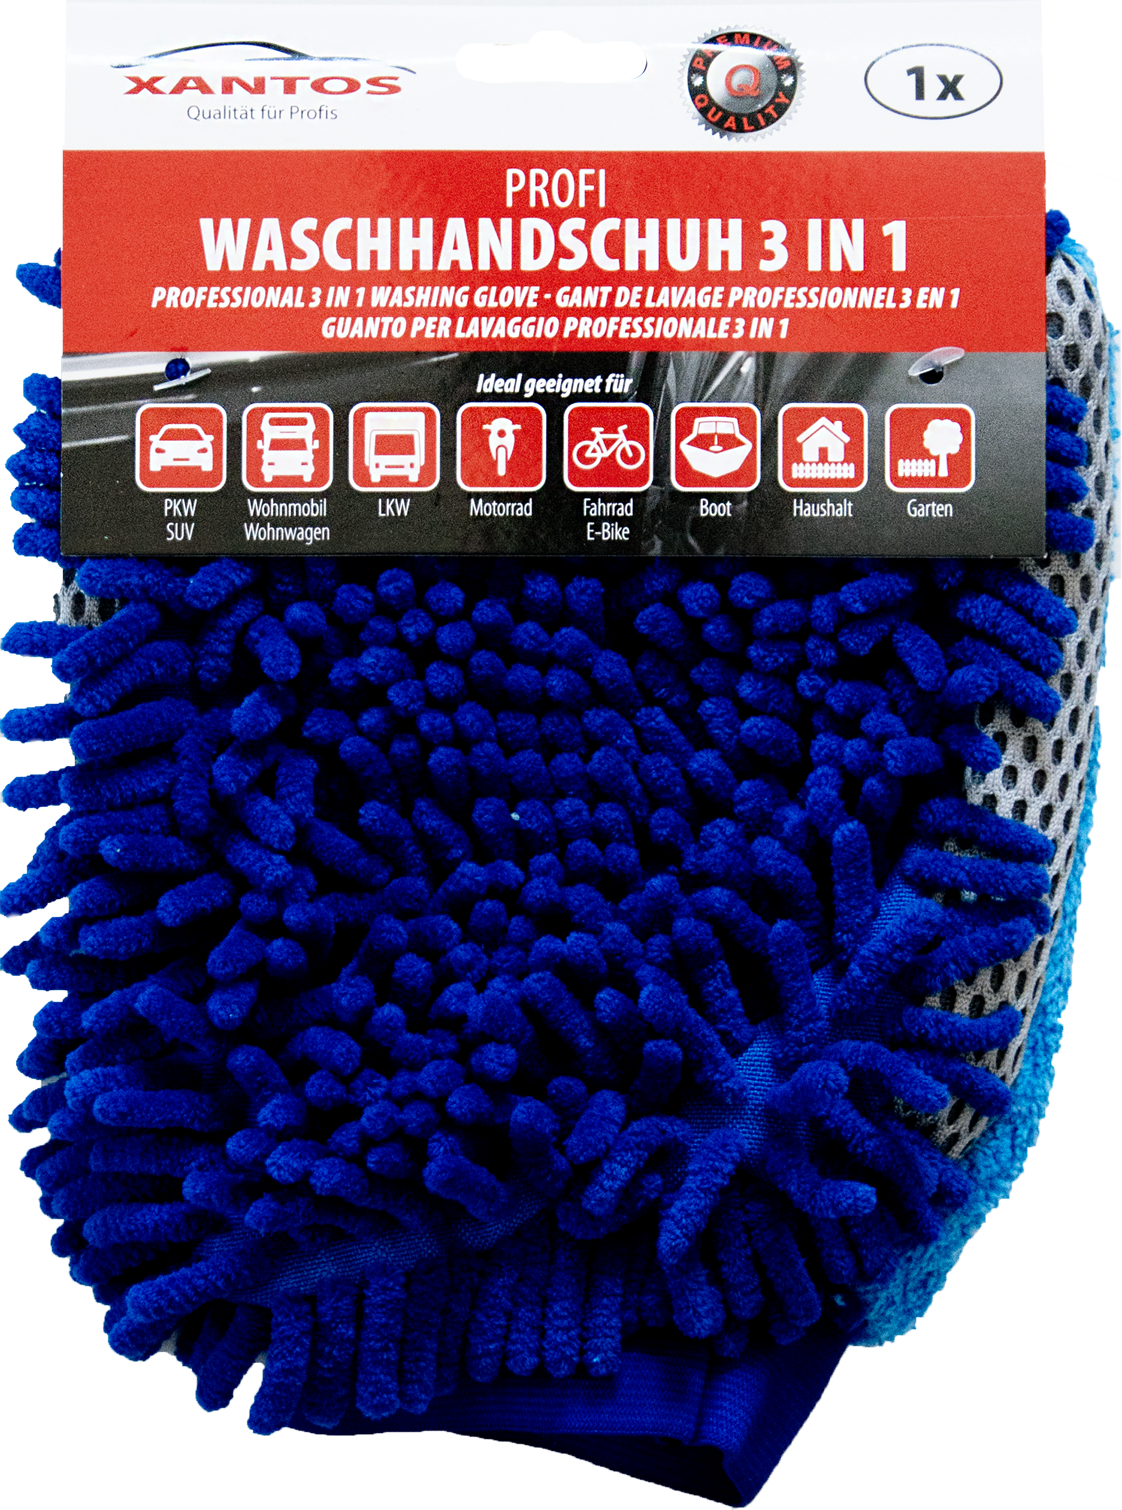 Picture of Profi Waschhandschuh 3 in 1